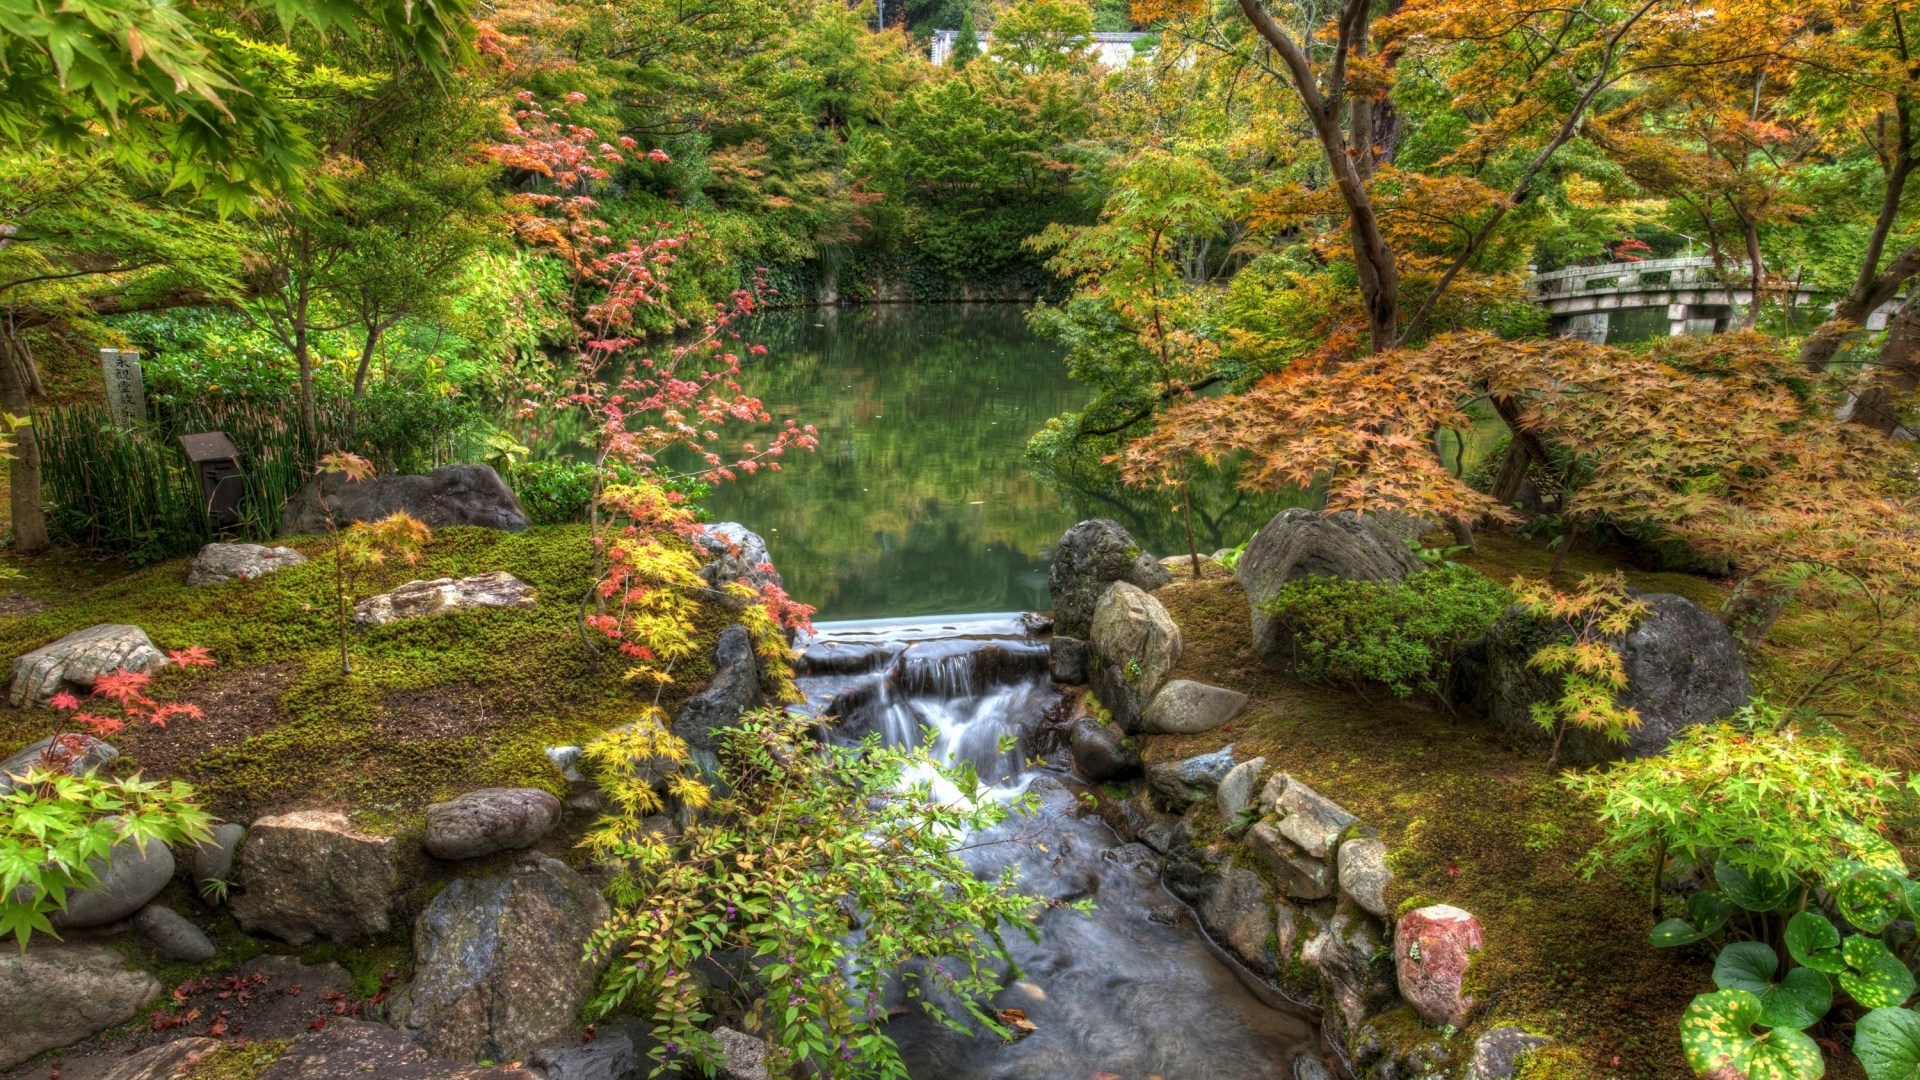 Kyoto Japan 1080p Hd Wallpaper Background Zen Garden Wallpaper Phone Hd Wallpaper Backgrounds Download